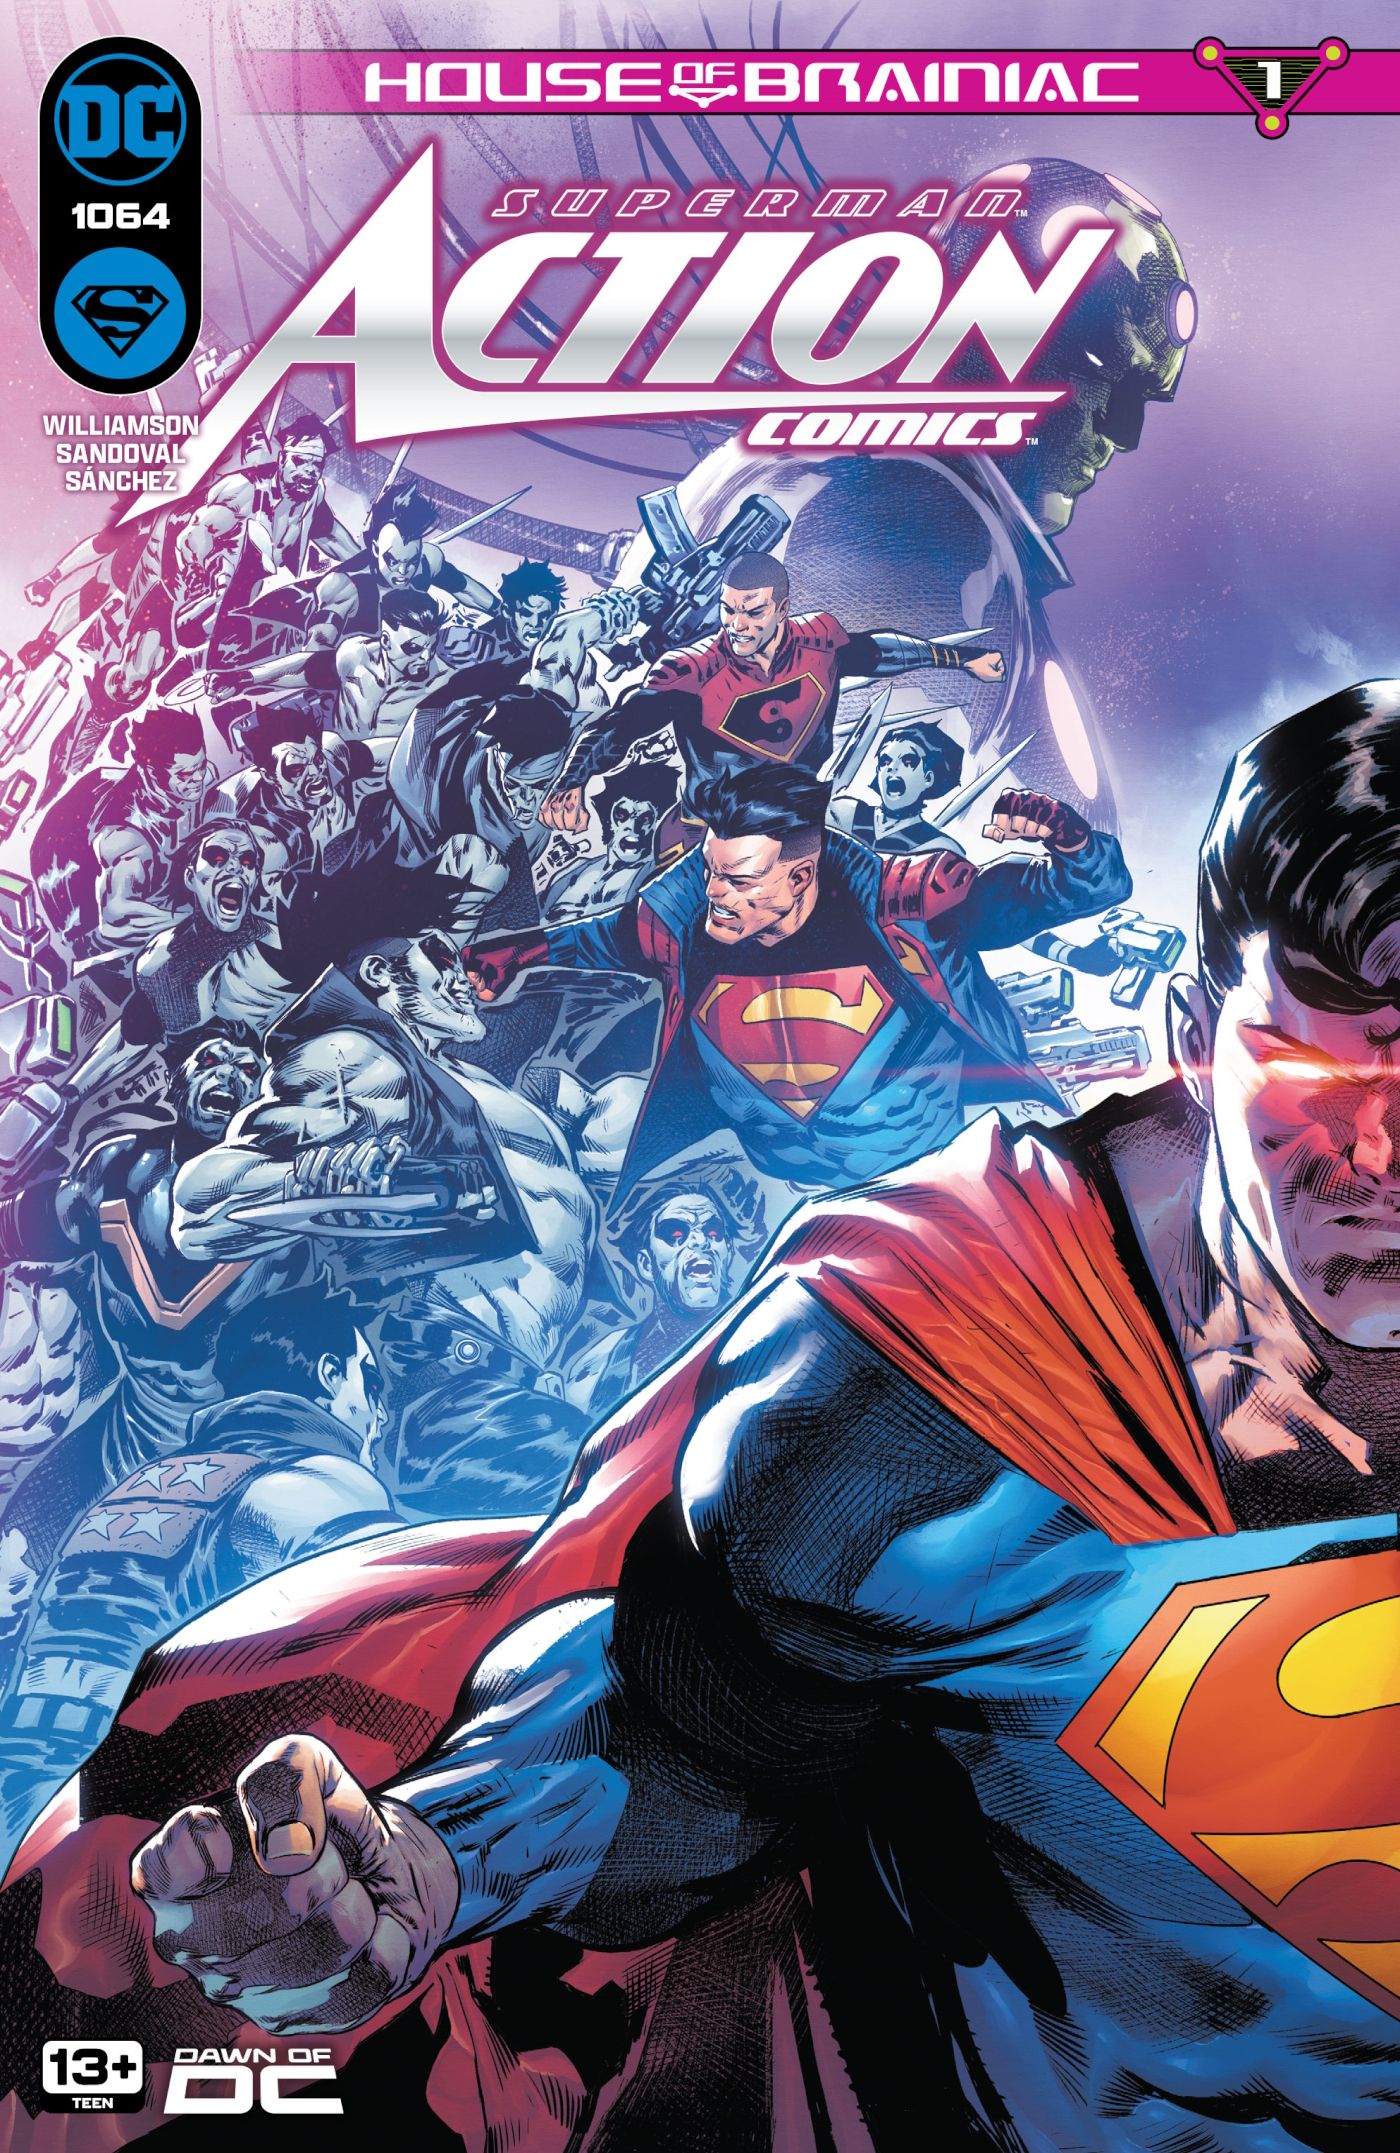 Action Comics 1064 Main Cover: Superman glaring as Superboy attacks an army of Lobos.